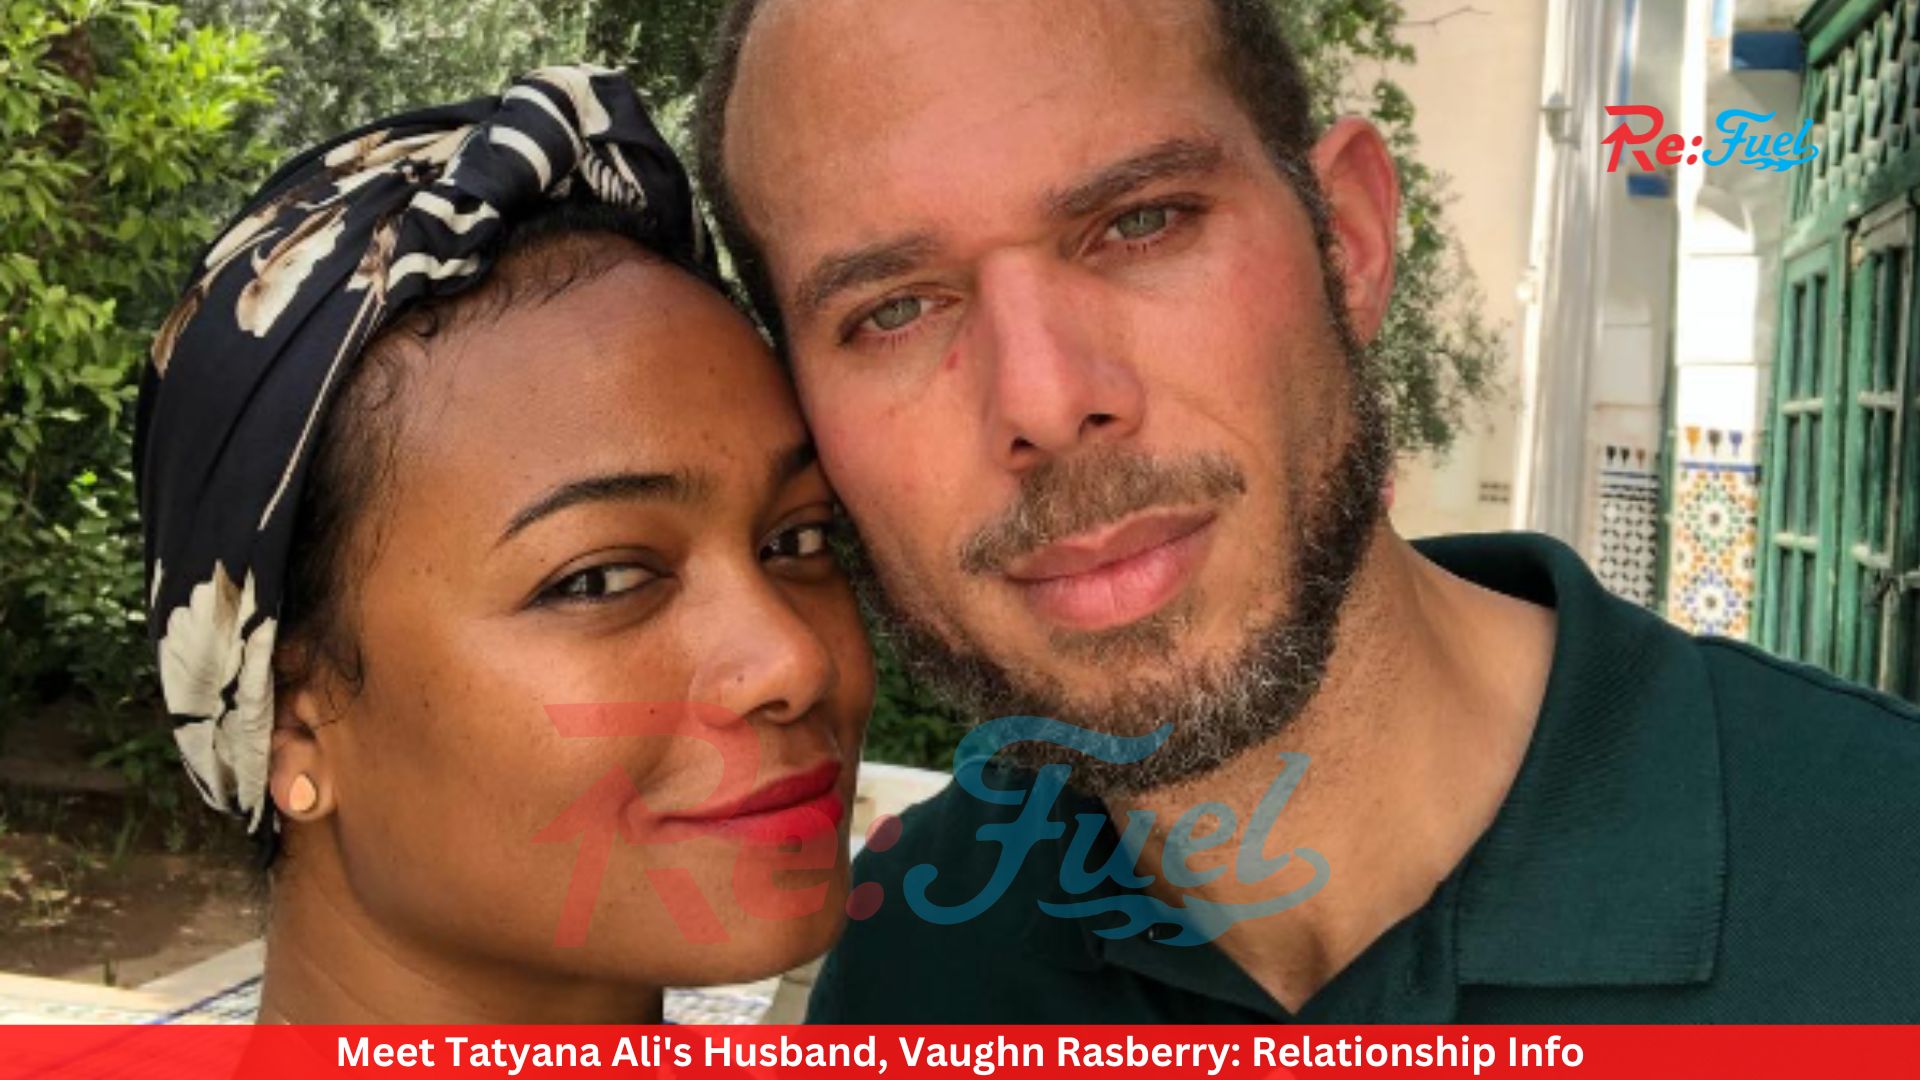 Meet Tatyana Ali's Husband, Vaughn Rasberry: Relationship Info